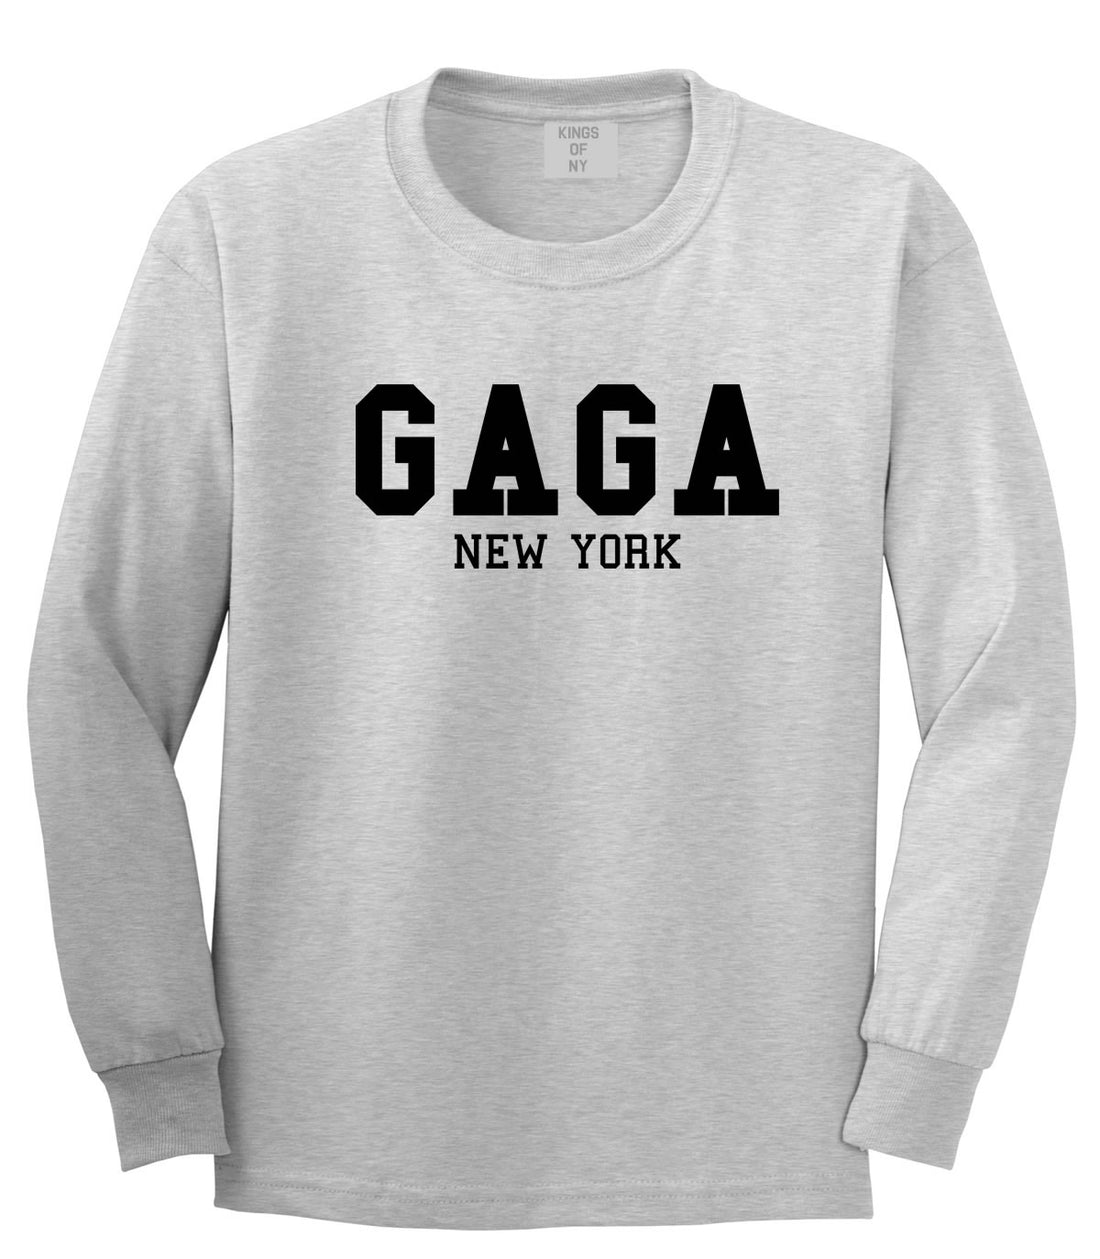 Gaga New York Long Sleeve T-Shirt in Grey by Kings Of NY